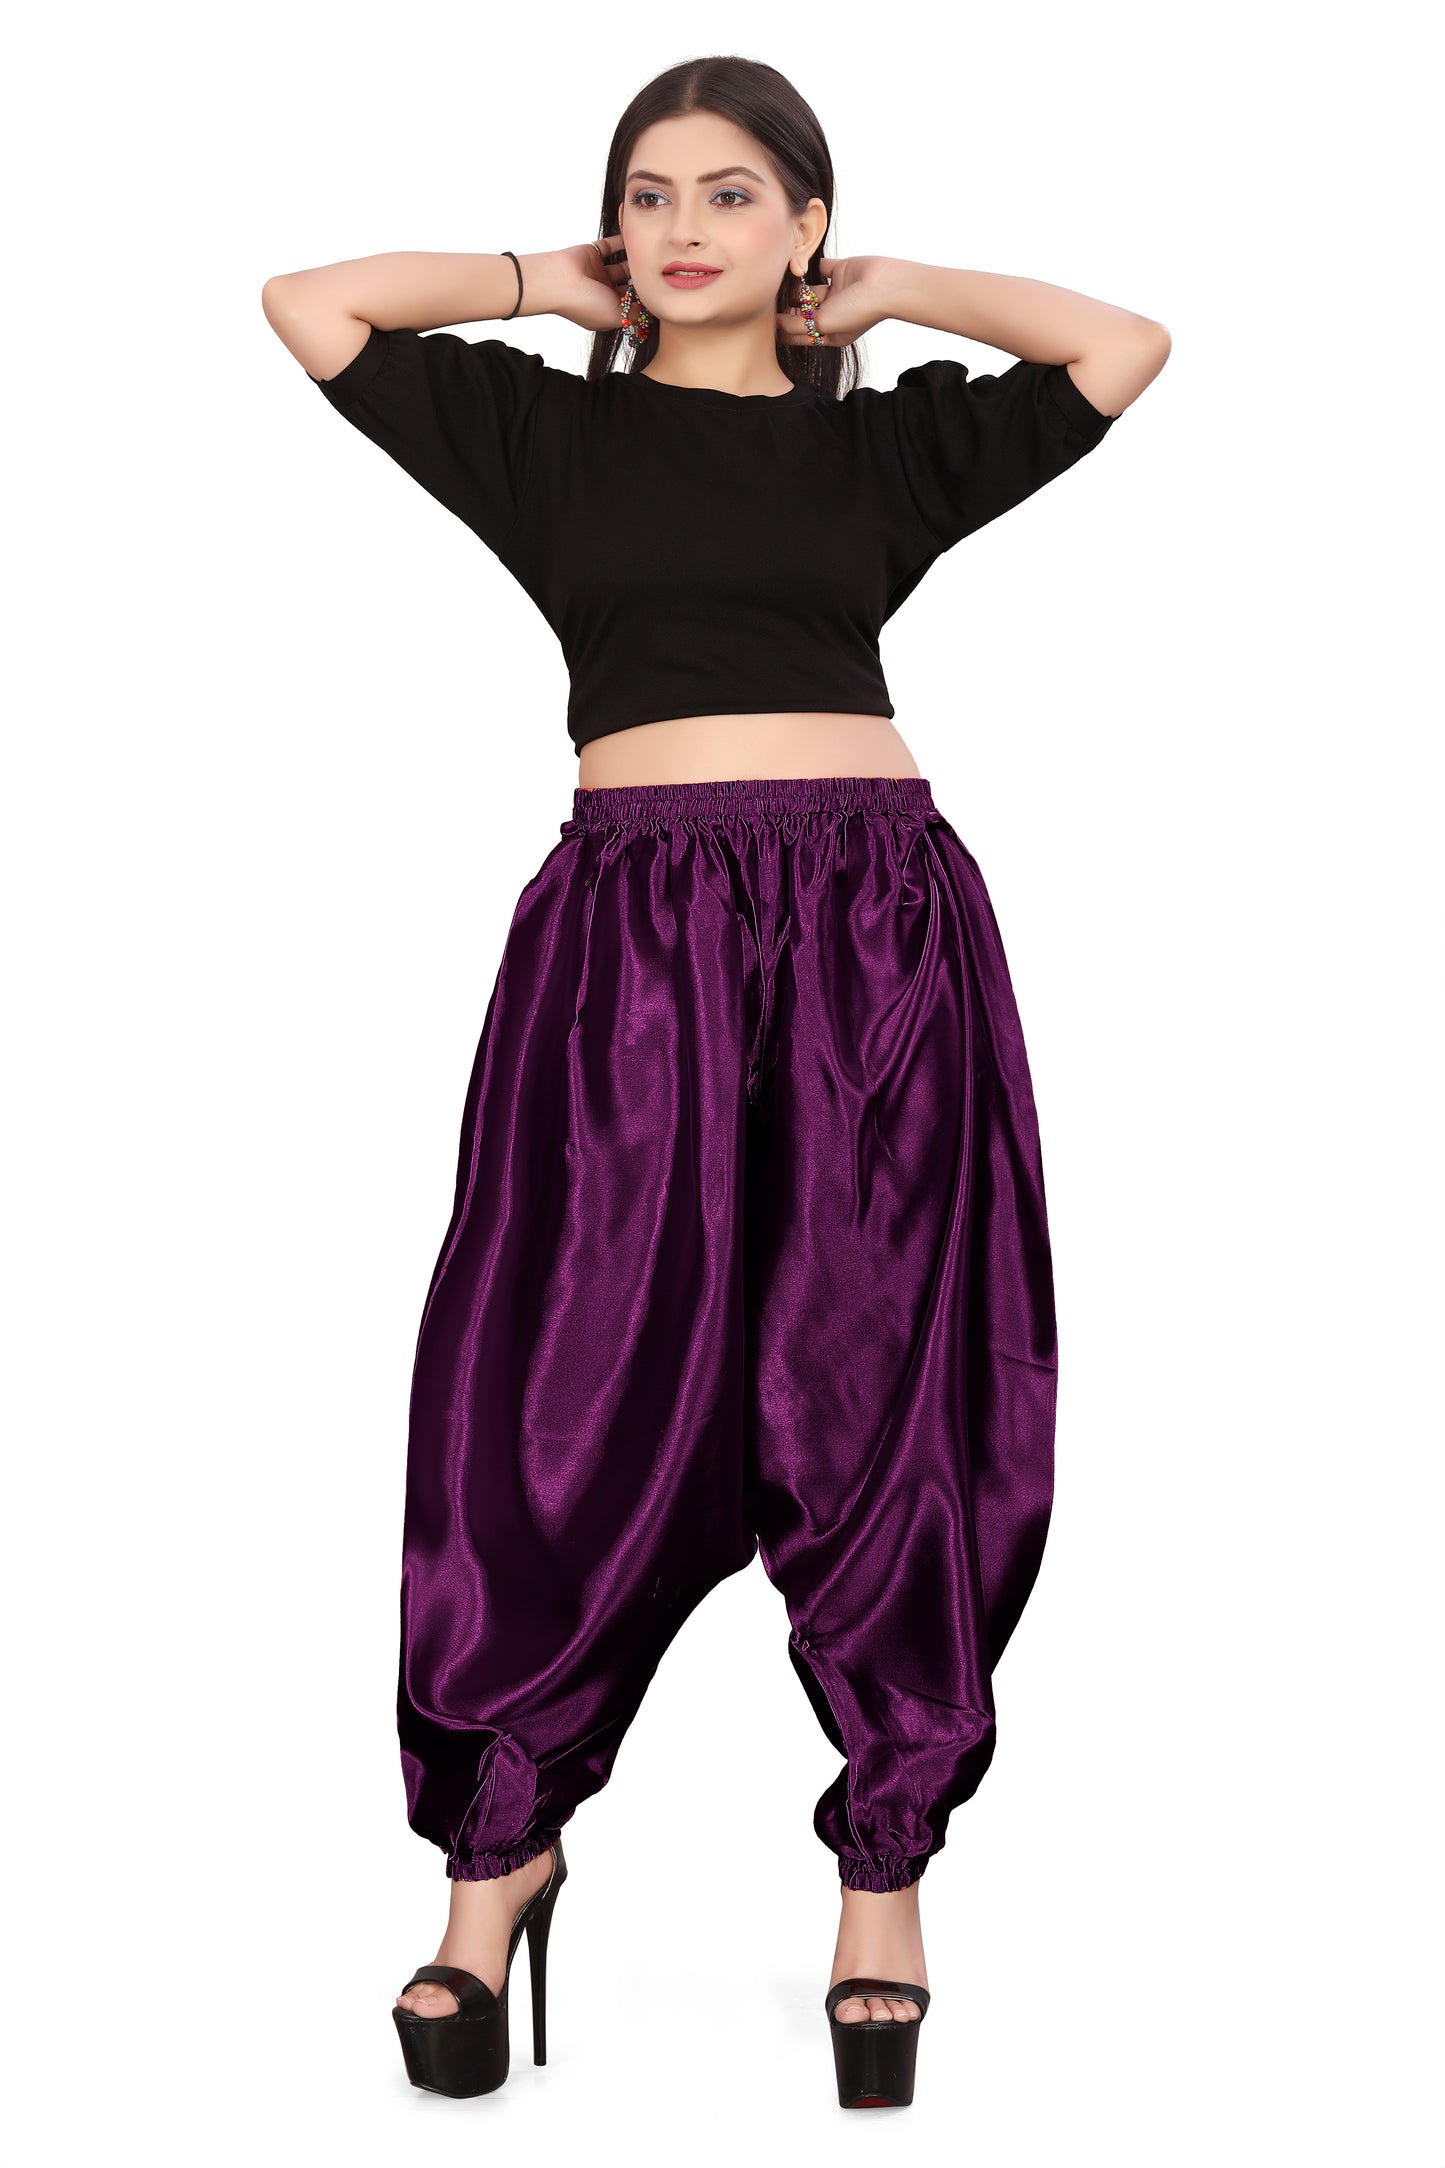 Satin Belly Dance Harem Pants S10-Regular Size 3